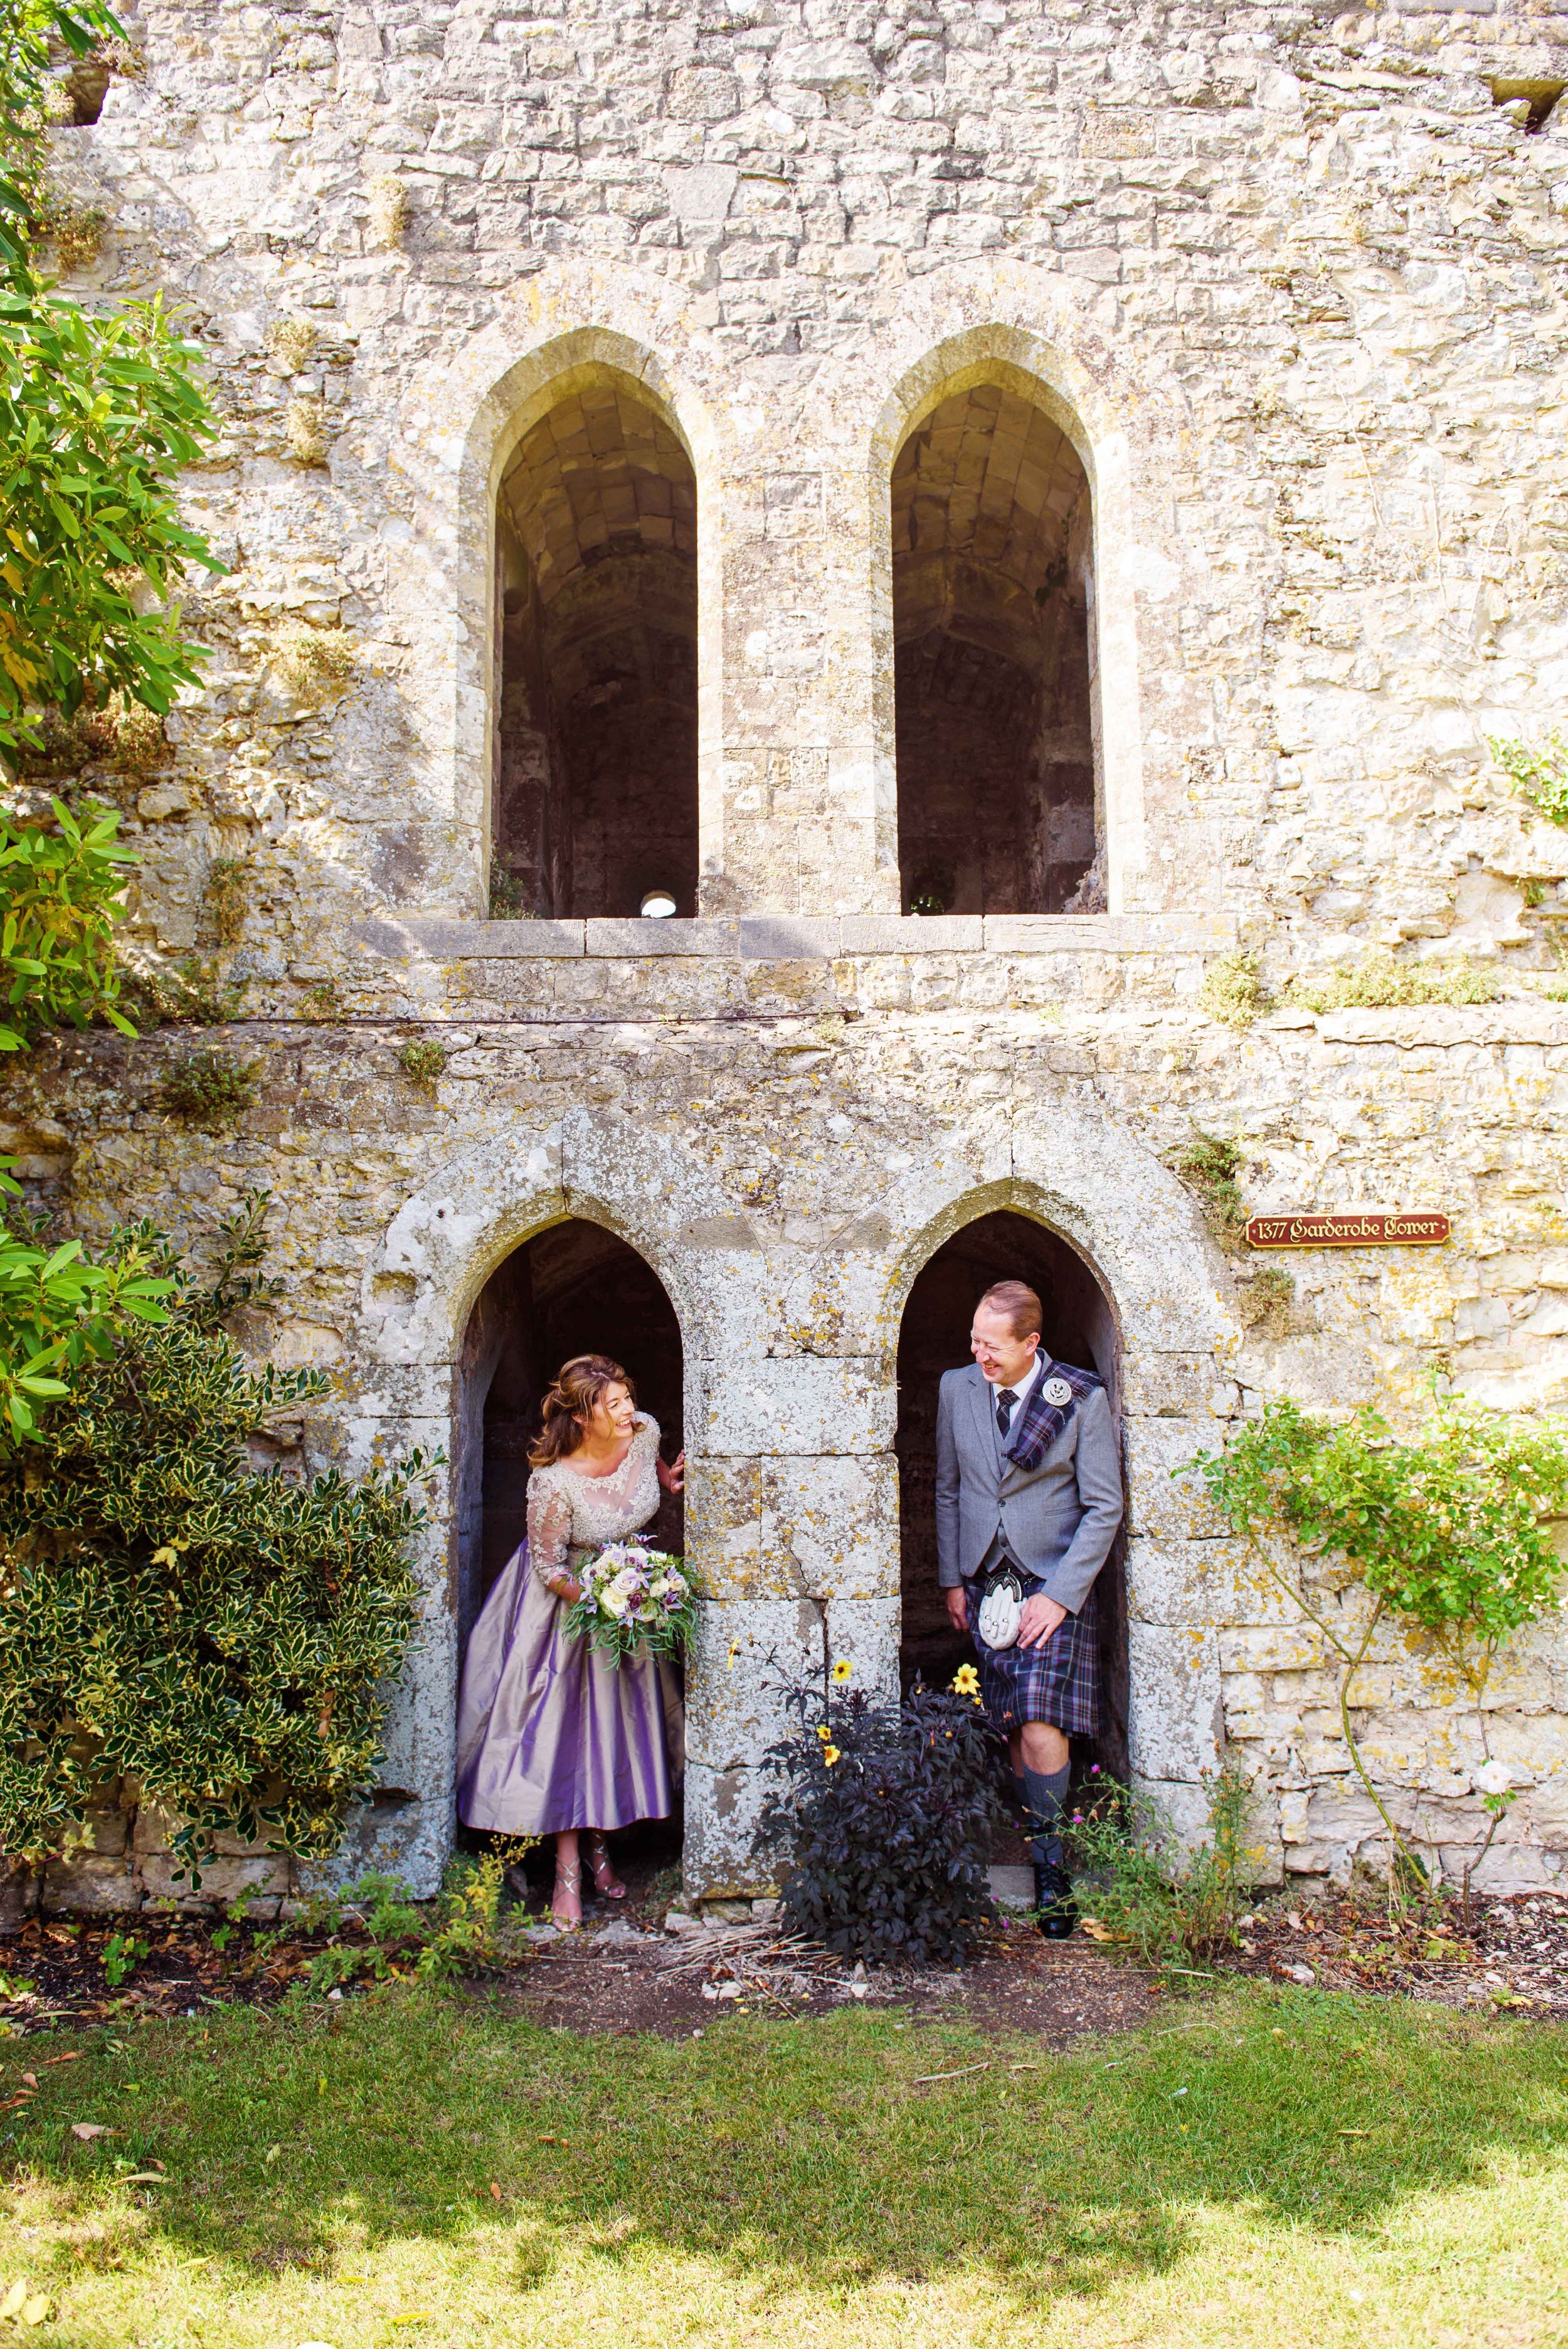 Wedding portrait at Amberley Castle